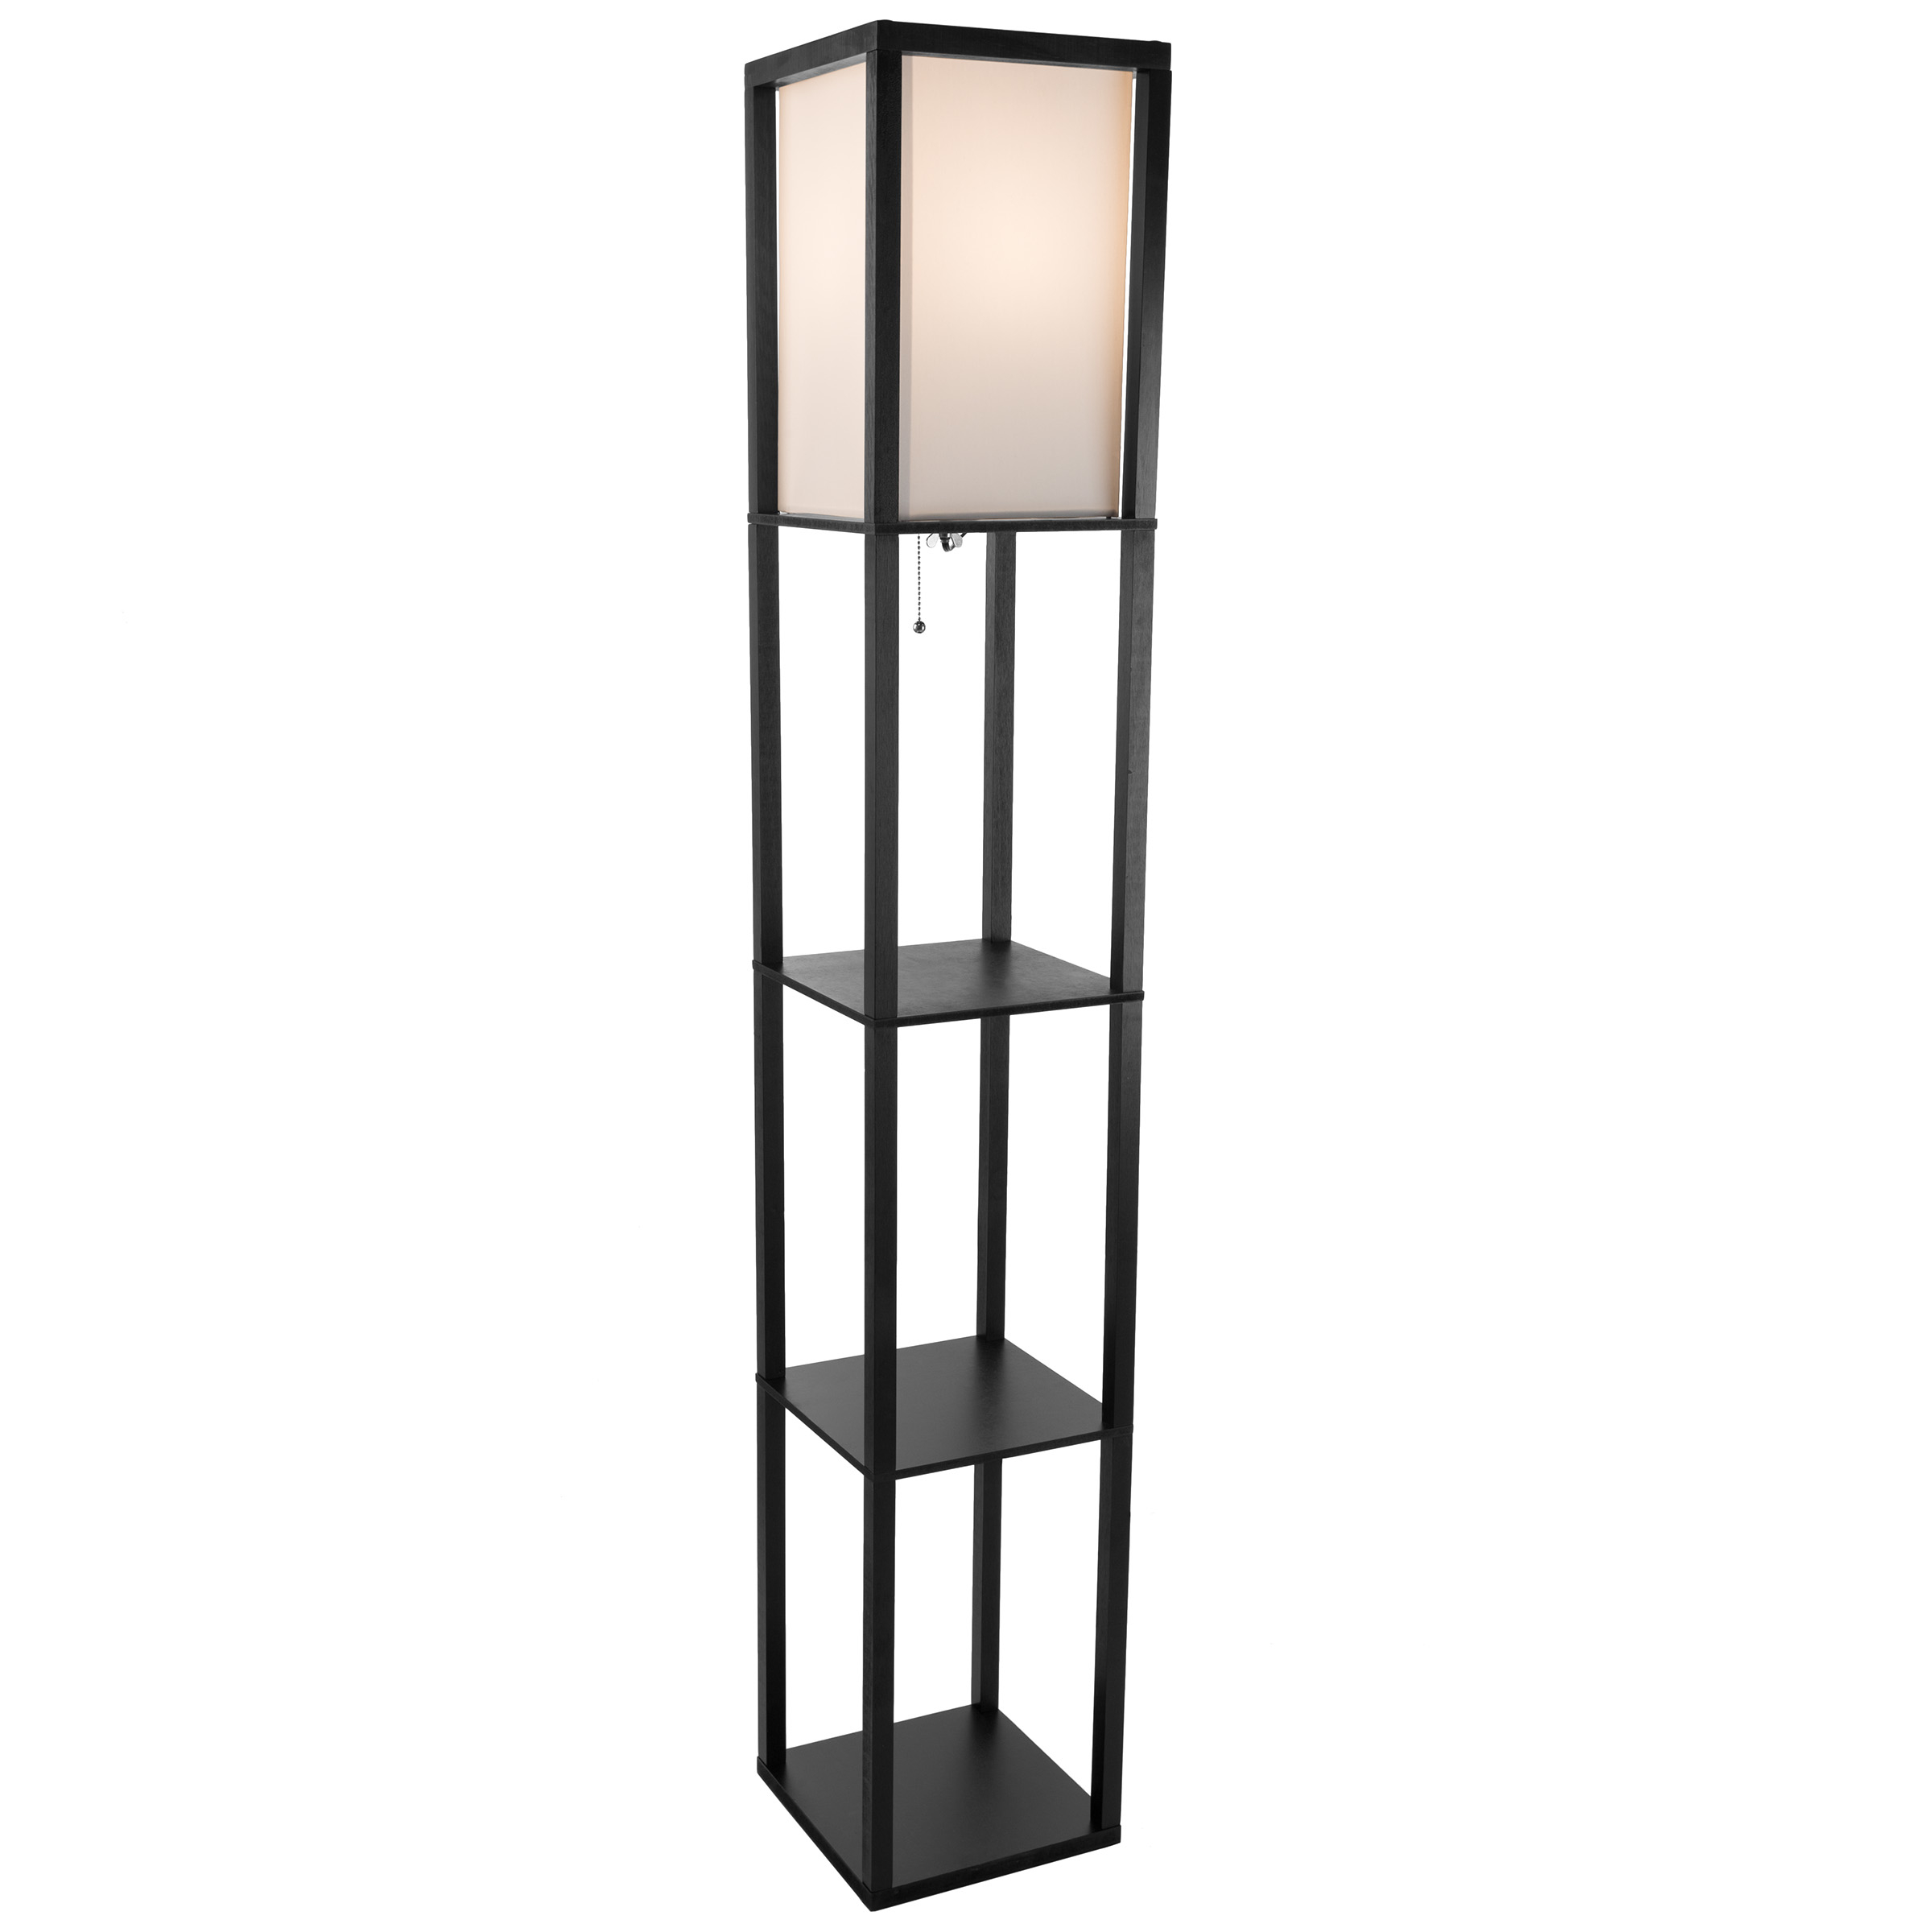 Etagere Black Floor Lamp Fabric Shade Ambient LED Light 3 Shelves Decor Elegant